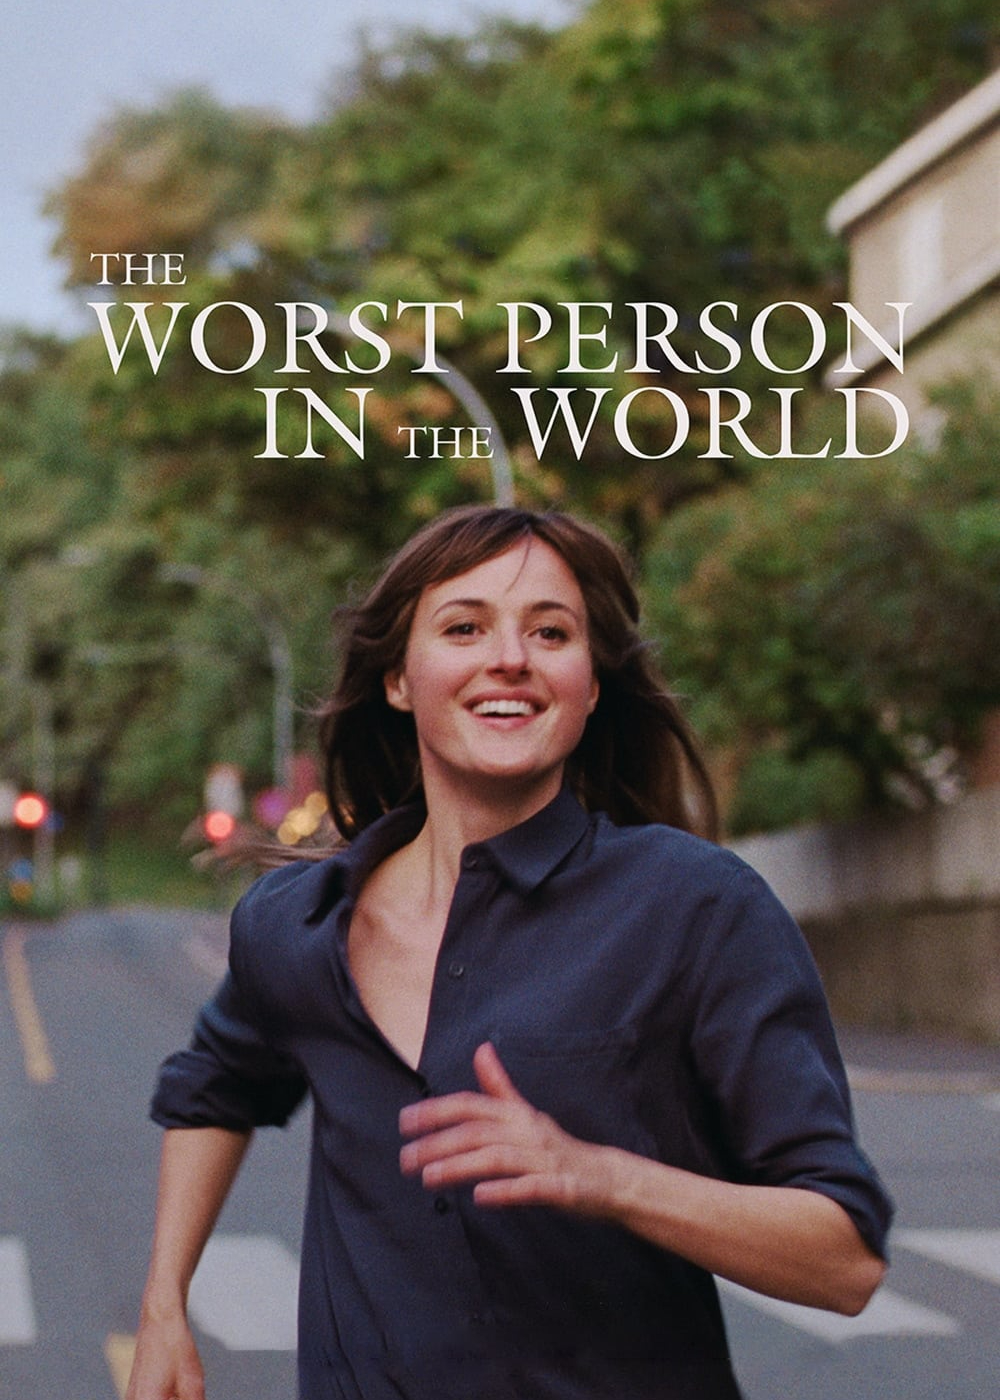 The Worst Person in the World - The Worst Person in the World